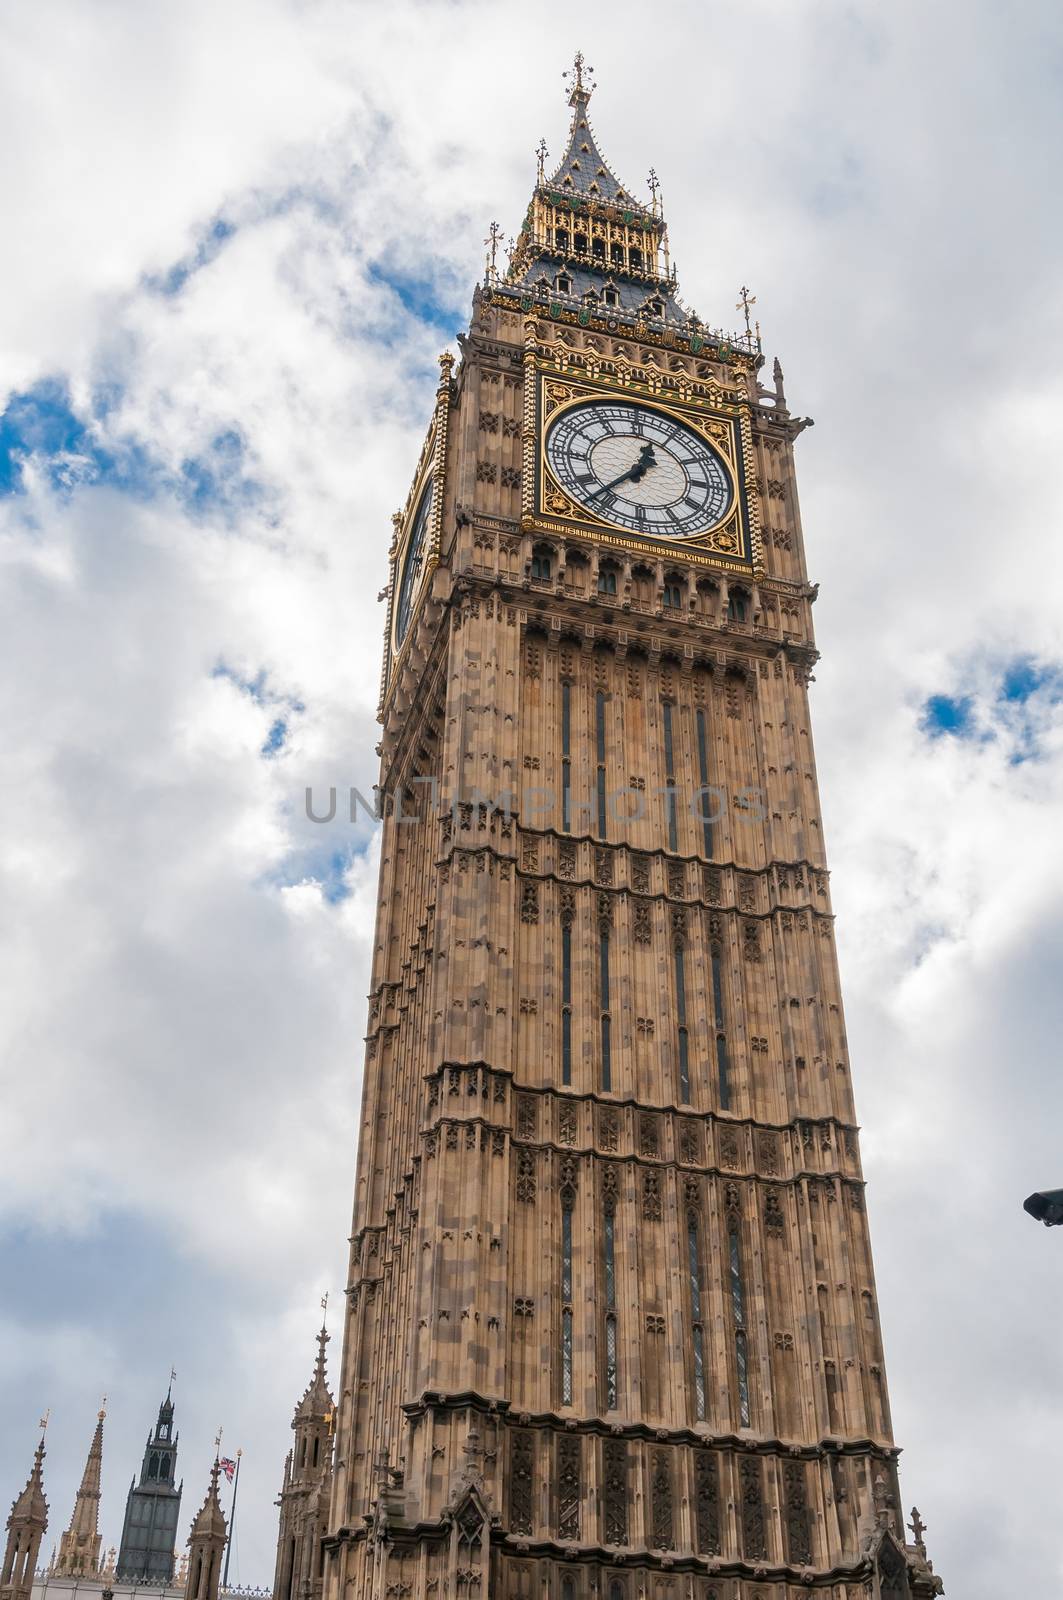 Closeup of Big Ben Clock Tower in London against cloudy sky